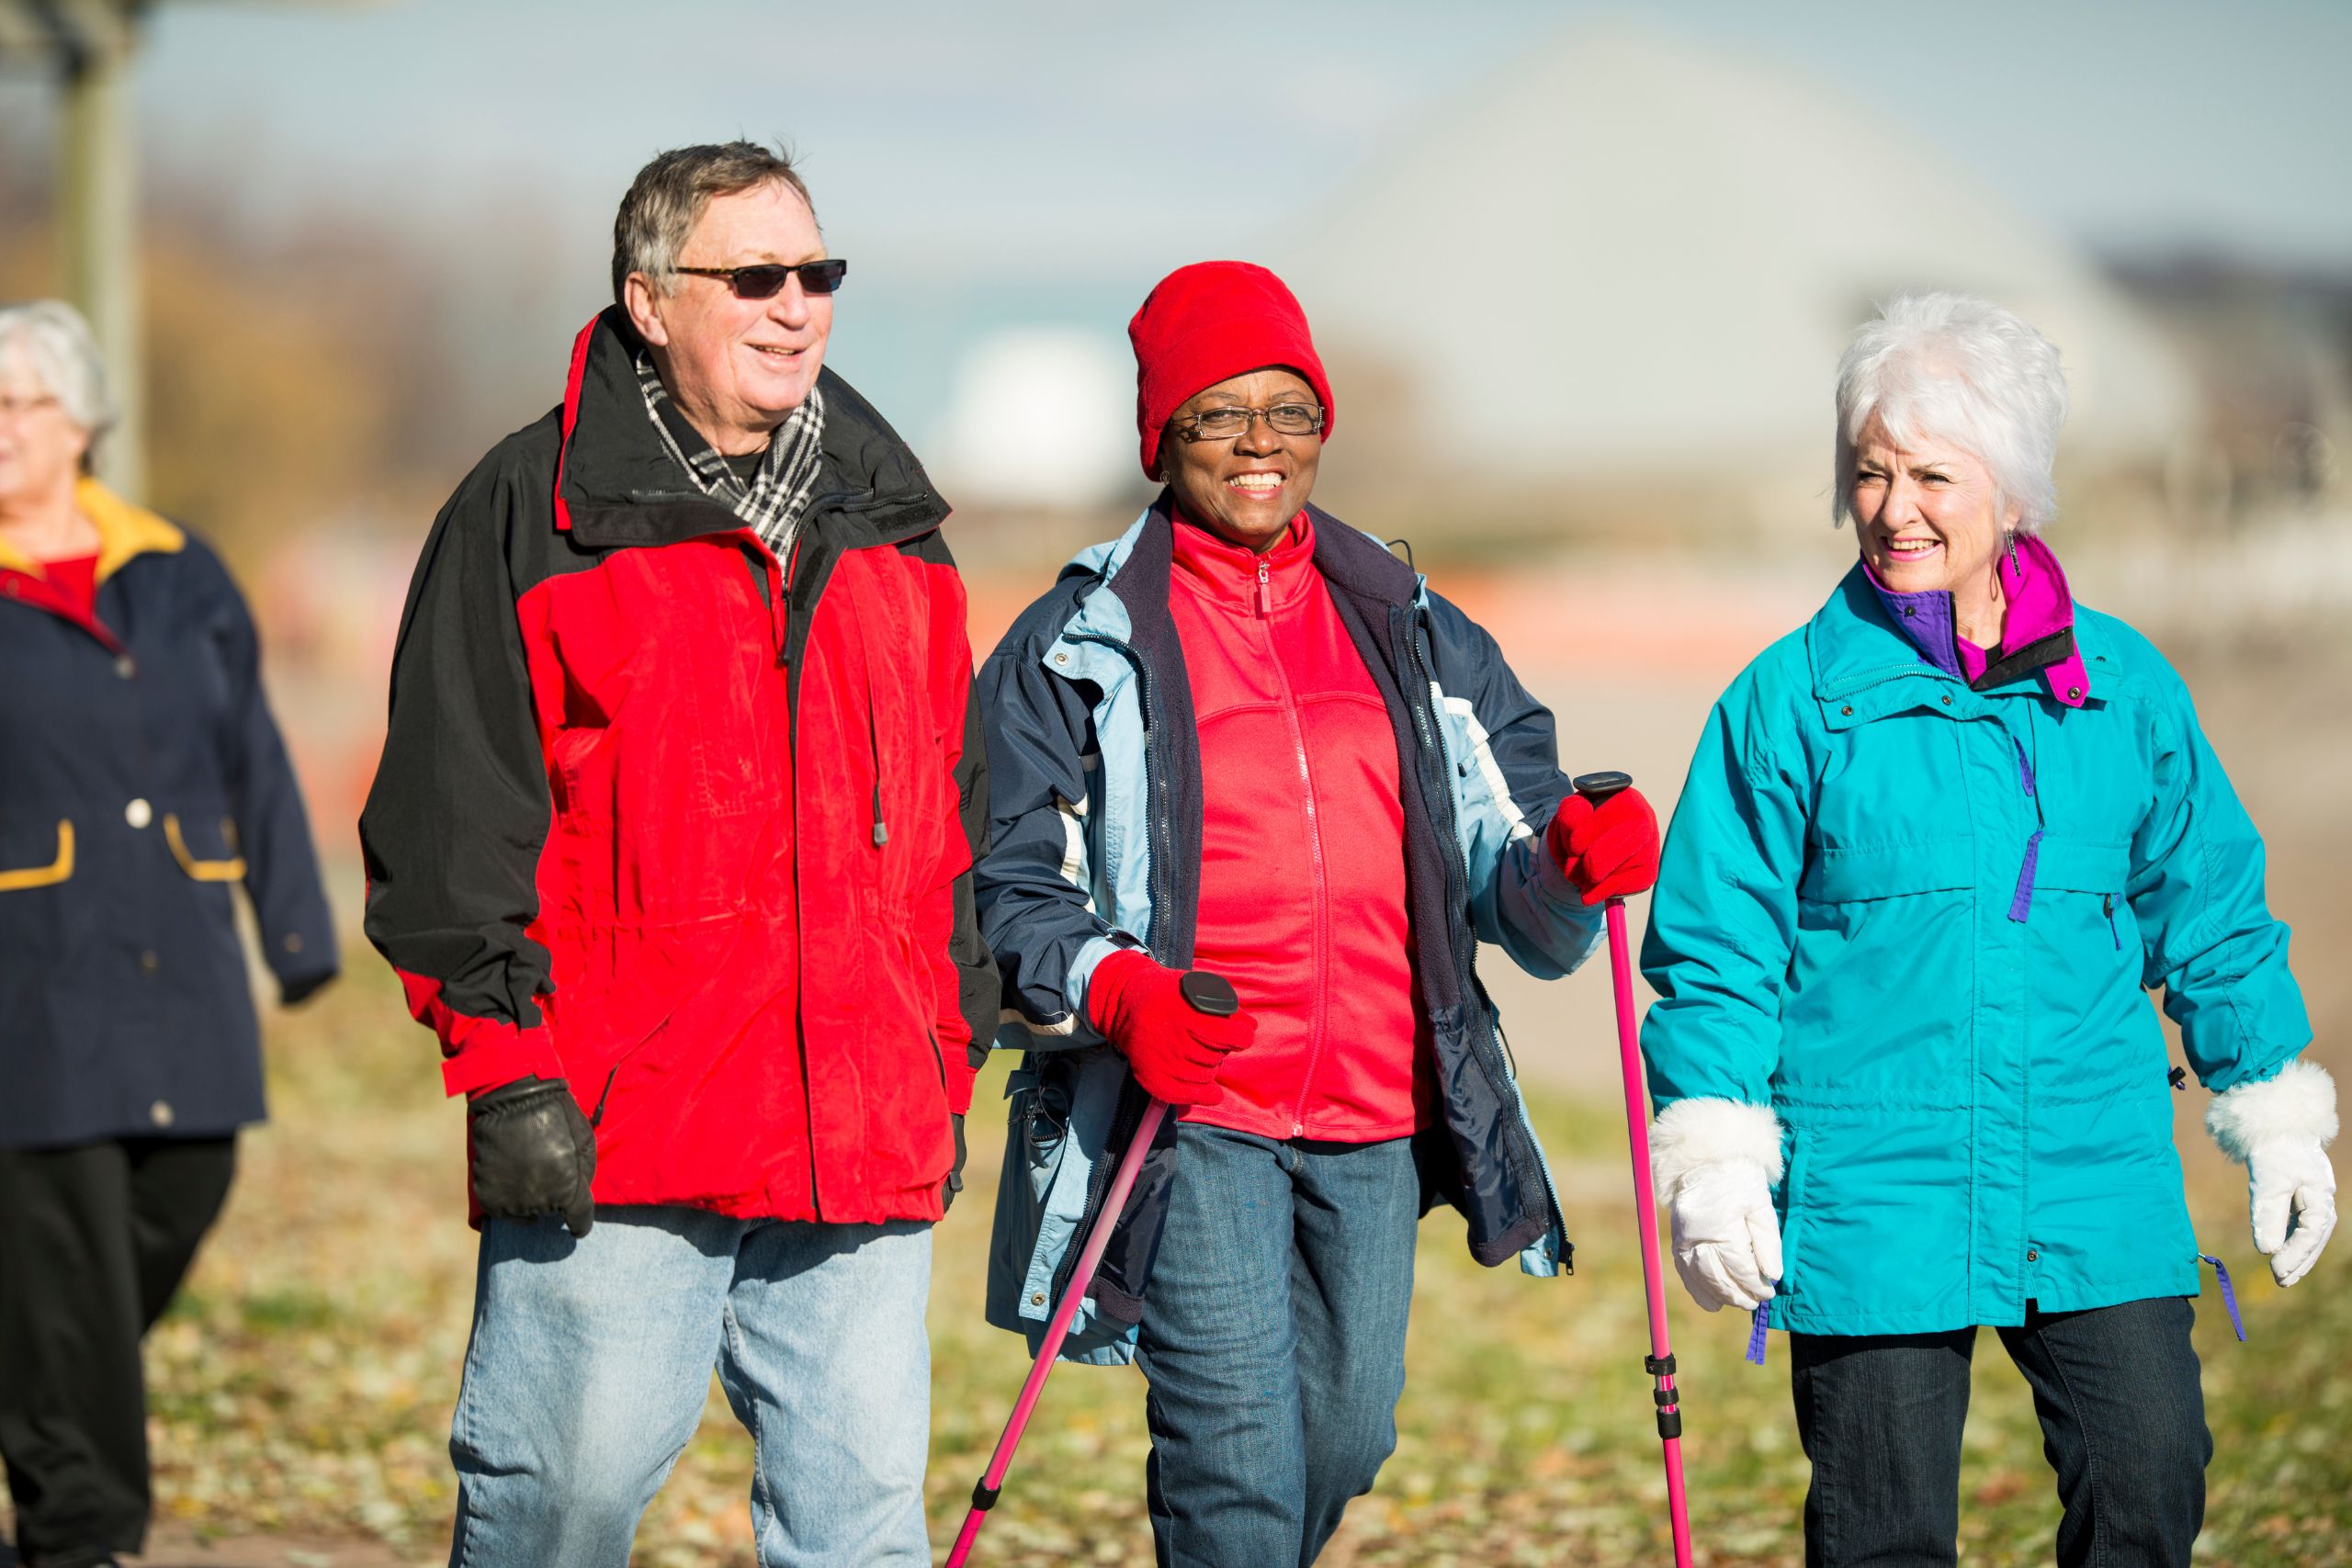 A group of happy, bundled-up elderly hikers walking together outside.